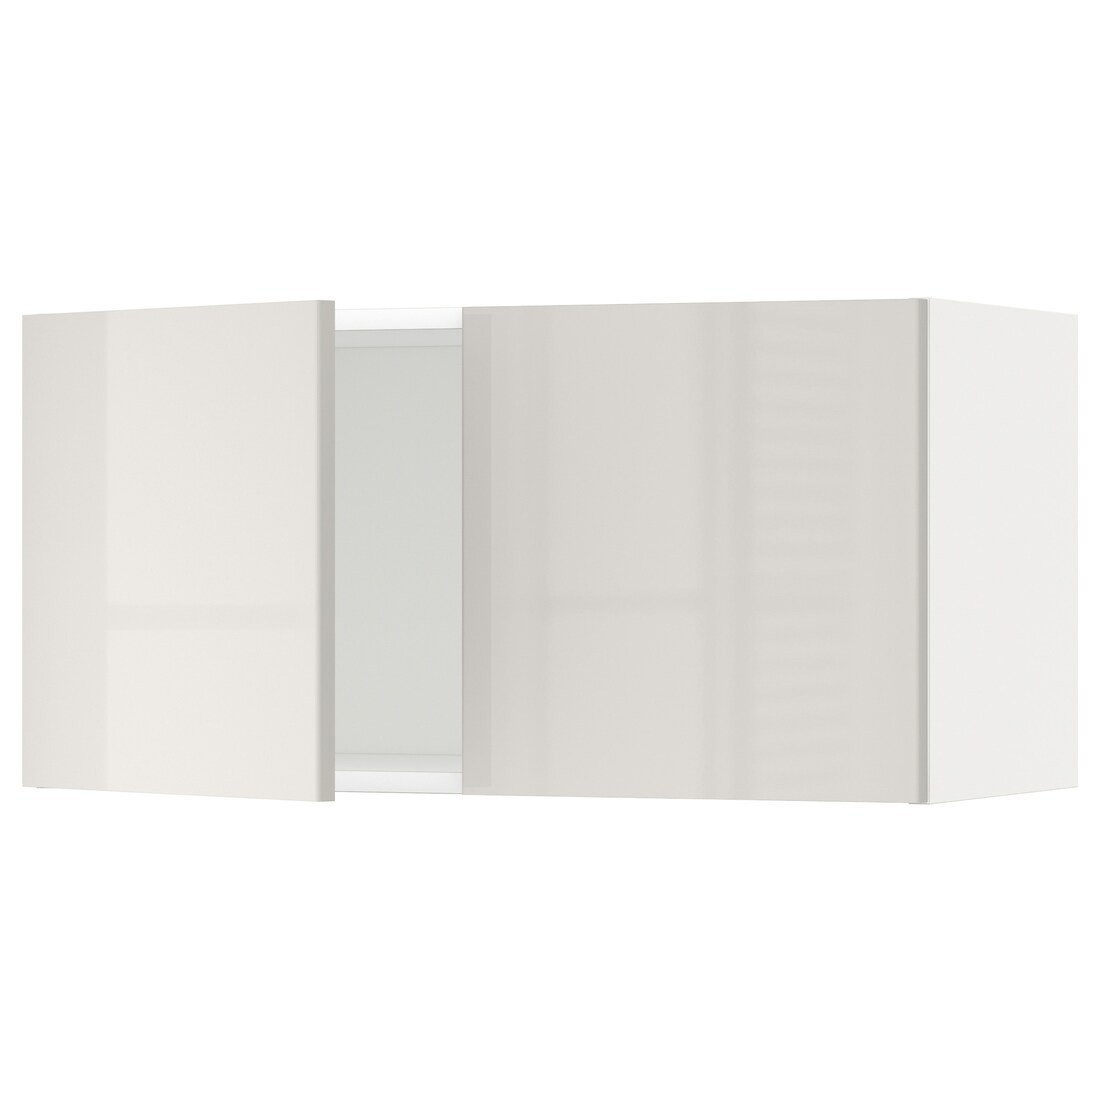 METOD МЕТОД Навесной шкаф с 2 дверями, белый / Ringhult светло-серый, 80x40 см